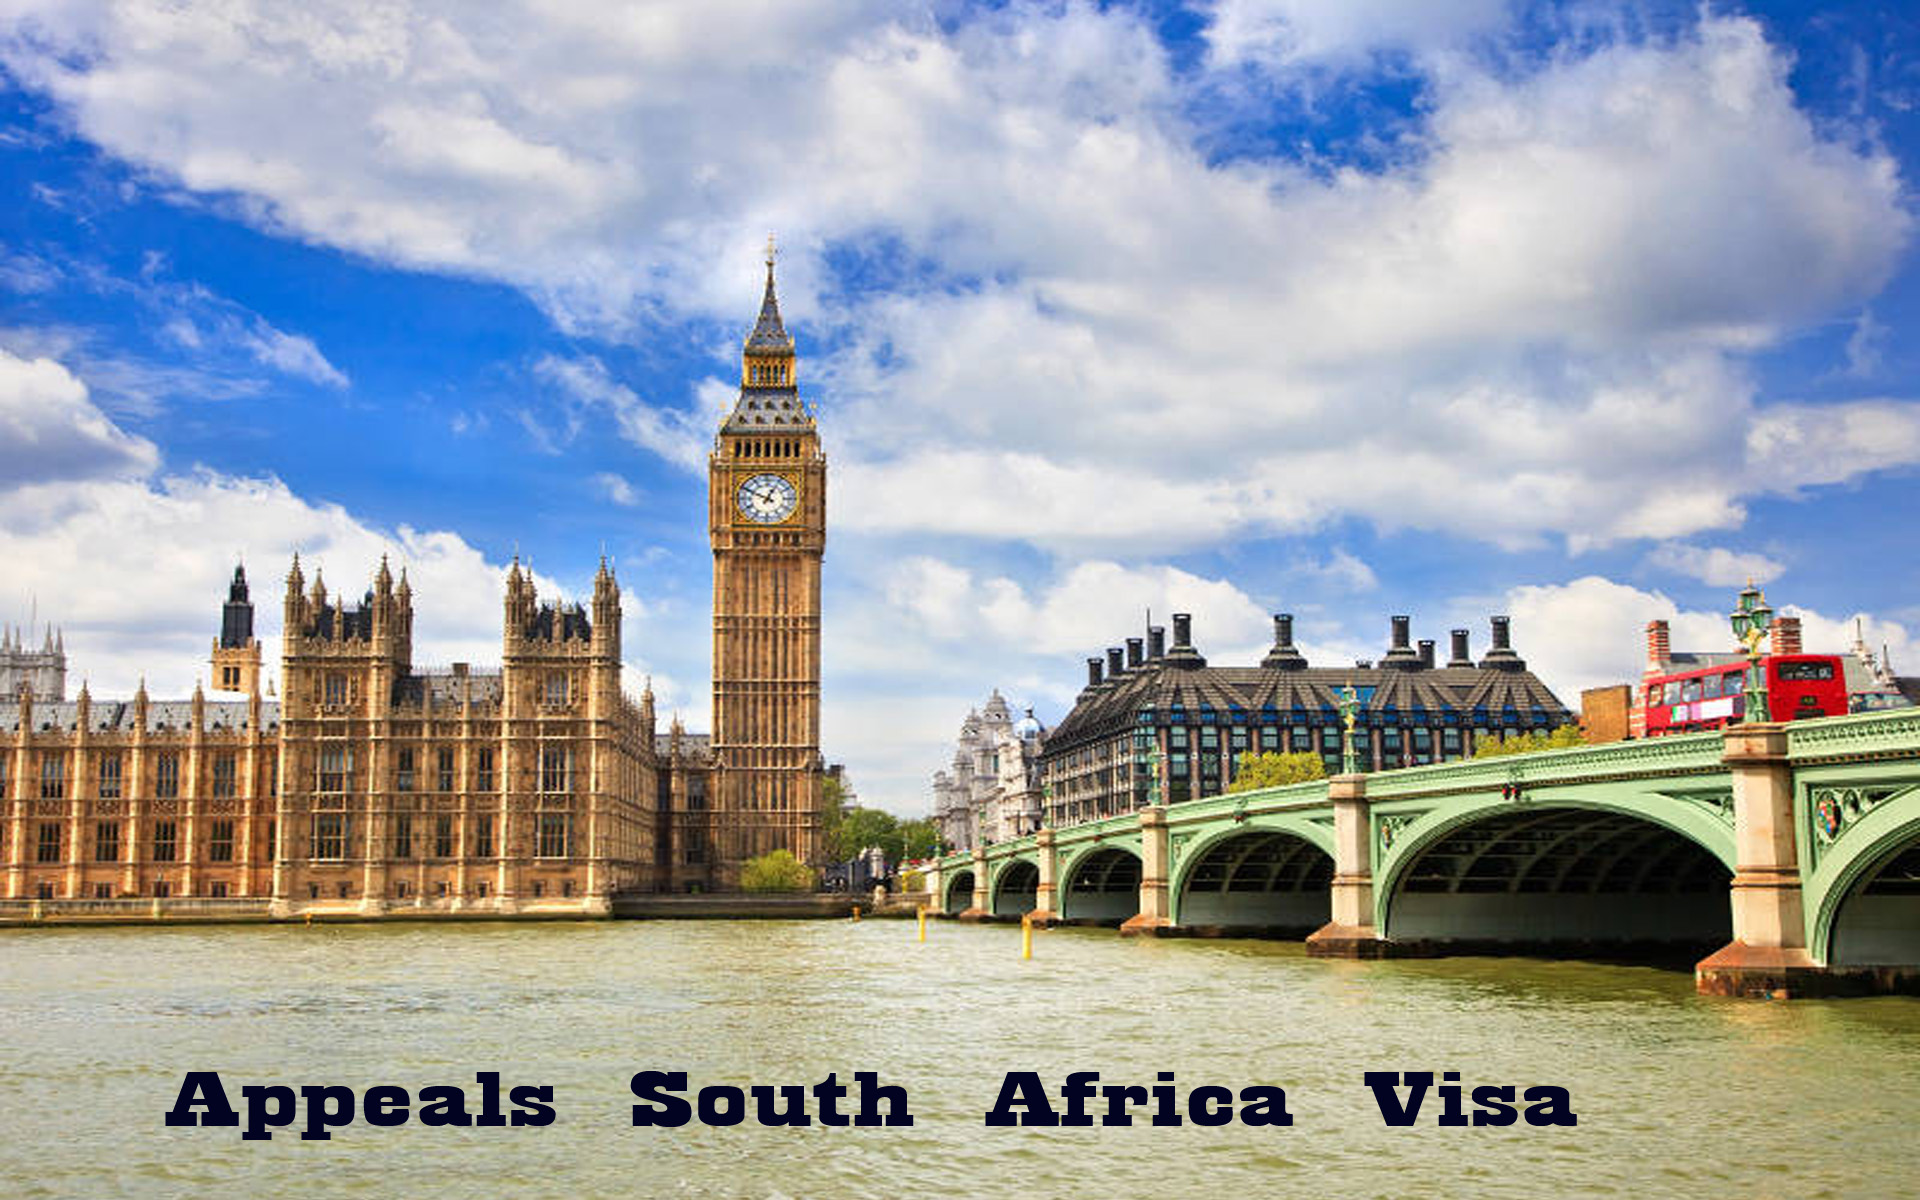 Appeals South Africa Visa  